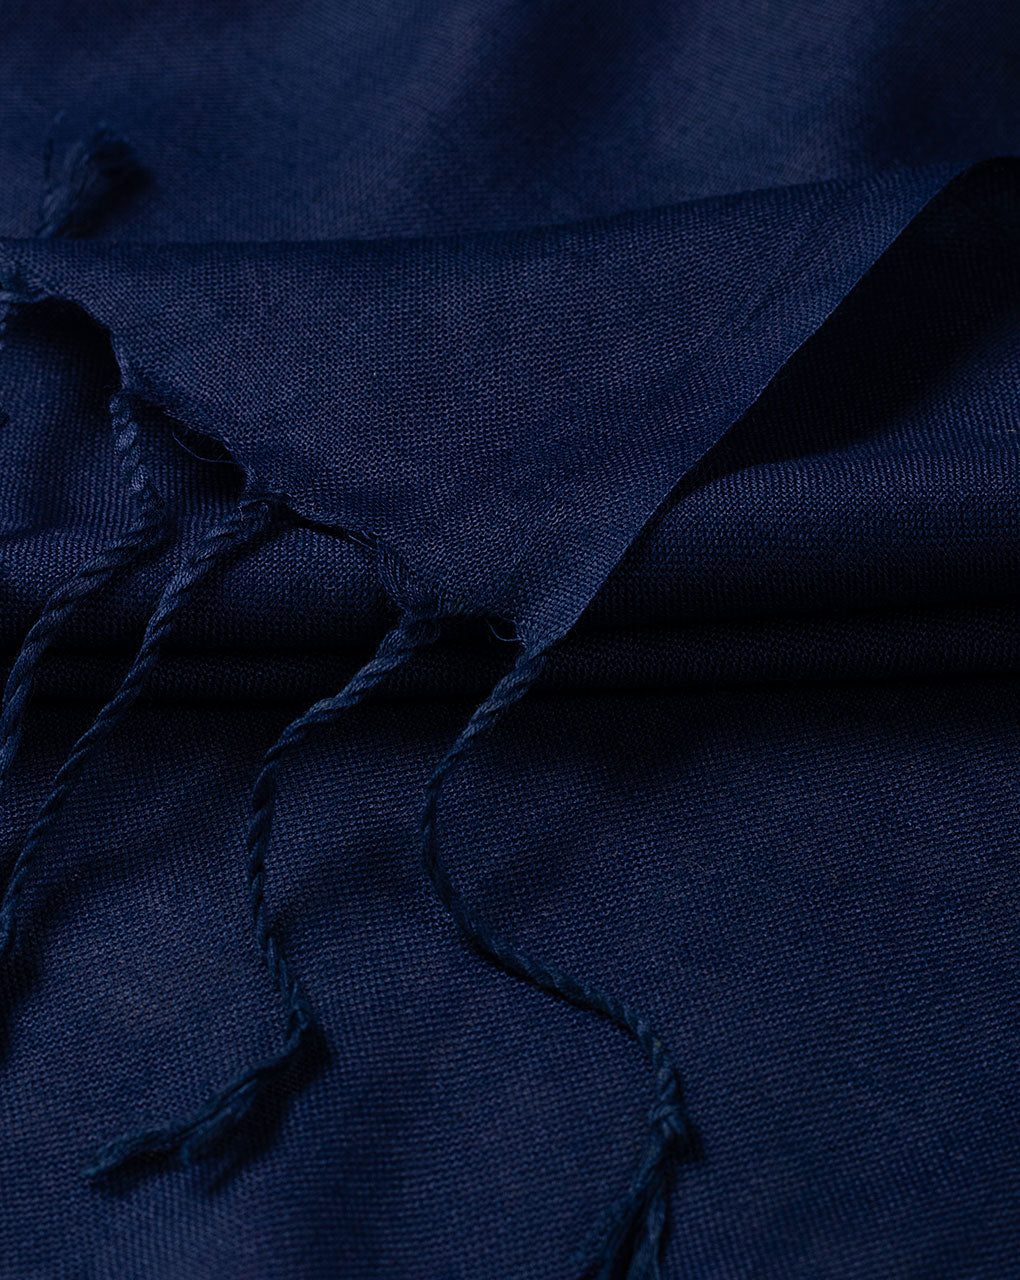 Blue Plain Woven Bhagalpuri Viscose Stole - Fabriclore.com